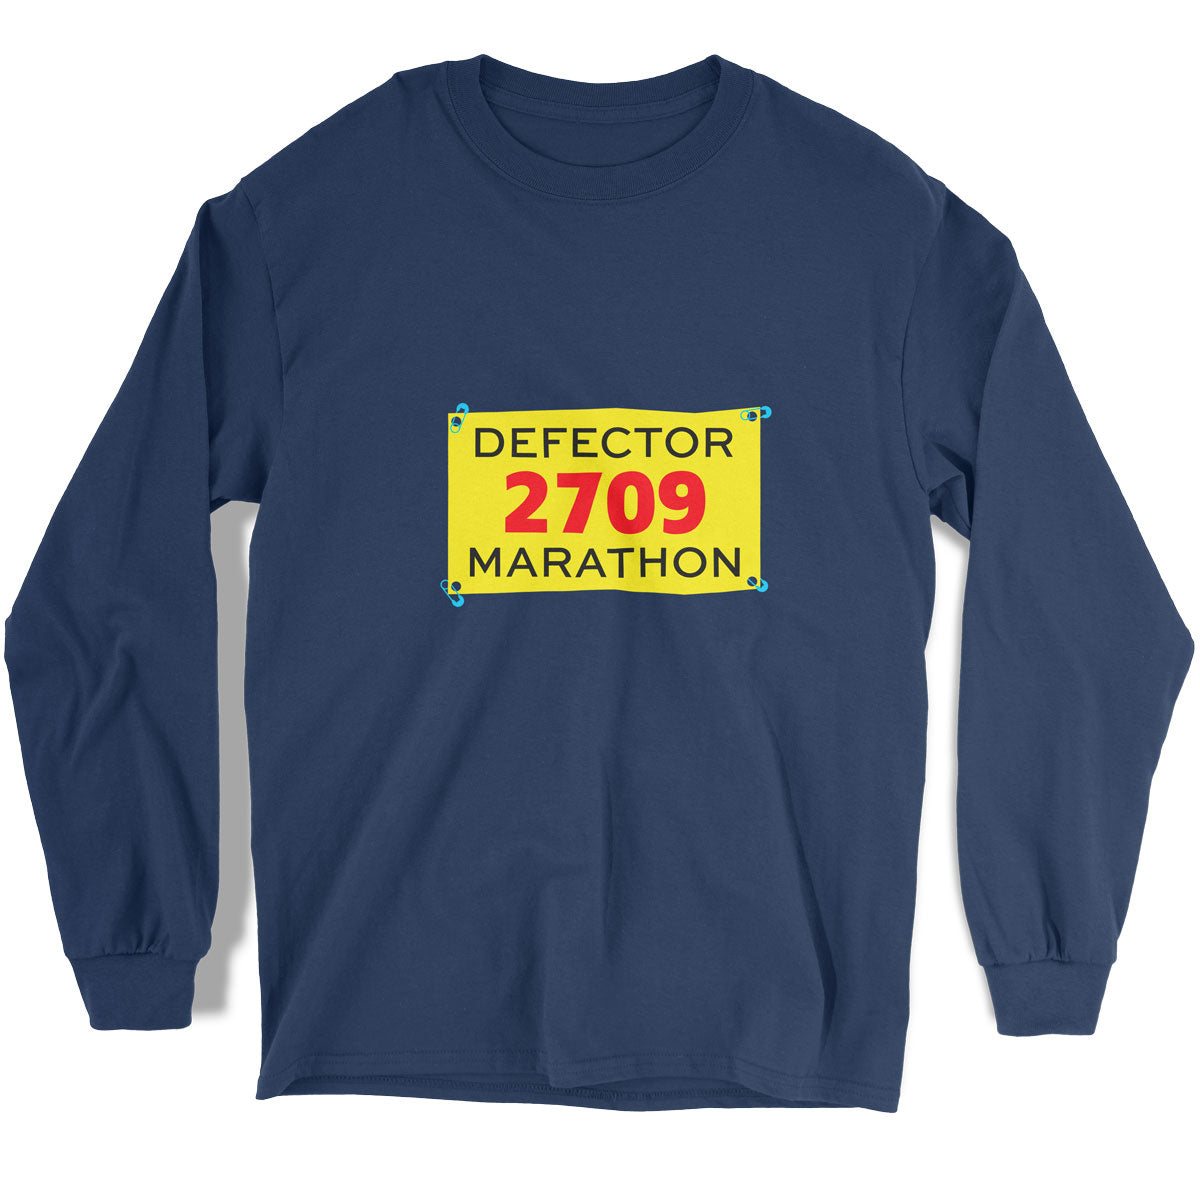 Defector Marathon boue t-shirt with yellow "bib" printed on it, DEFECTOR 2709 MARATHON